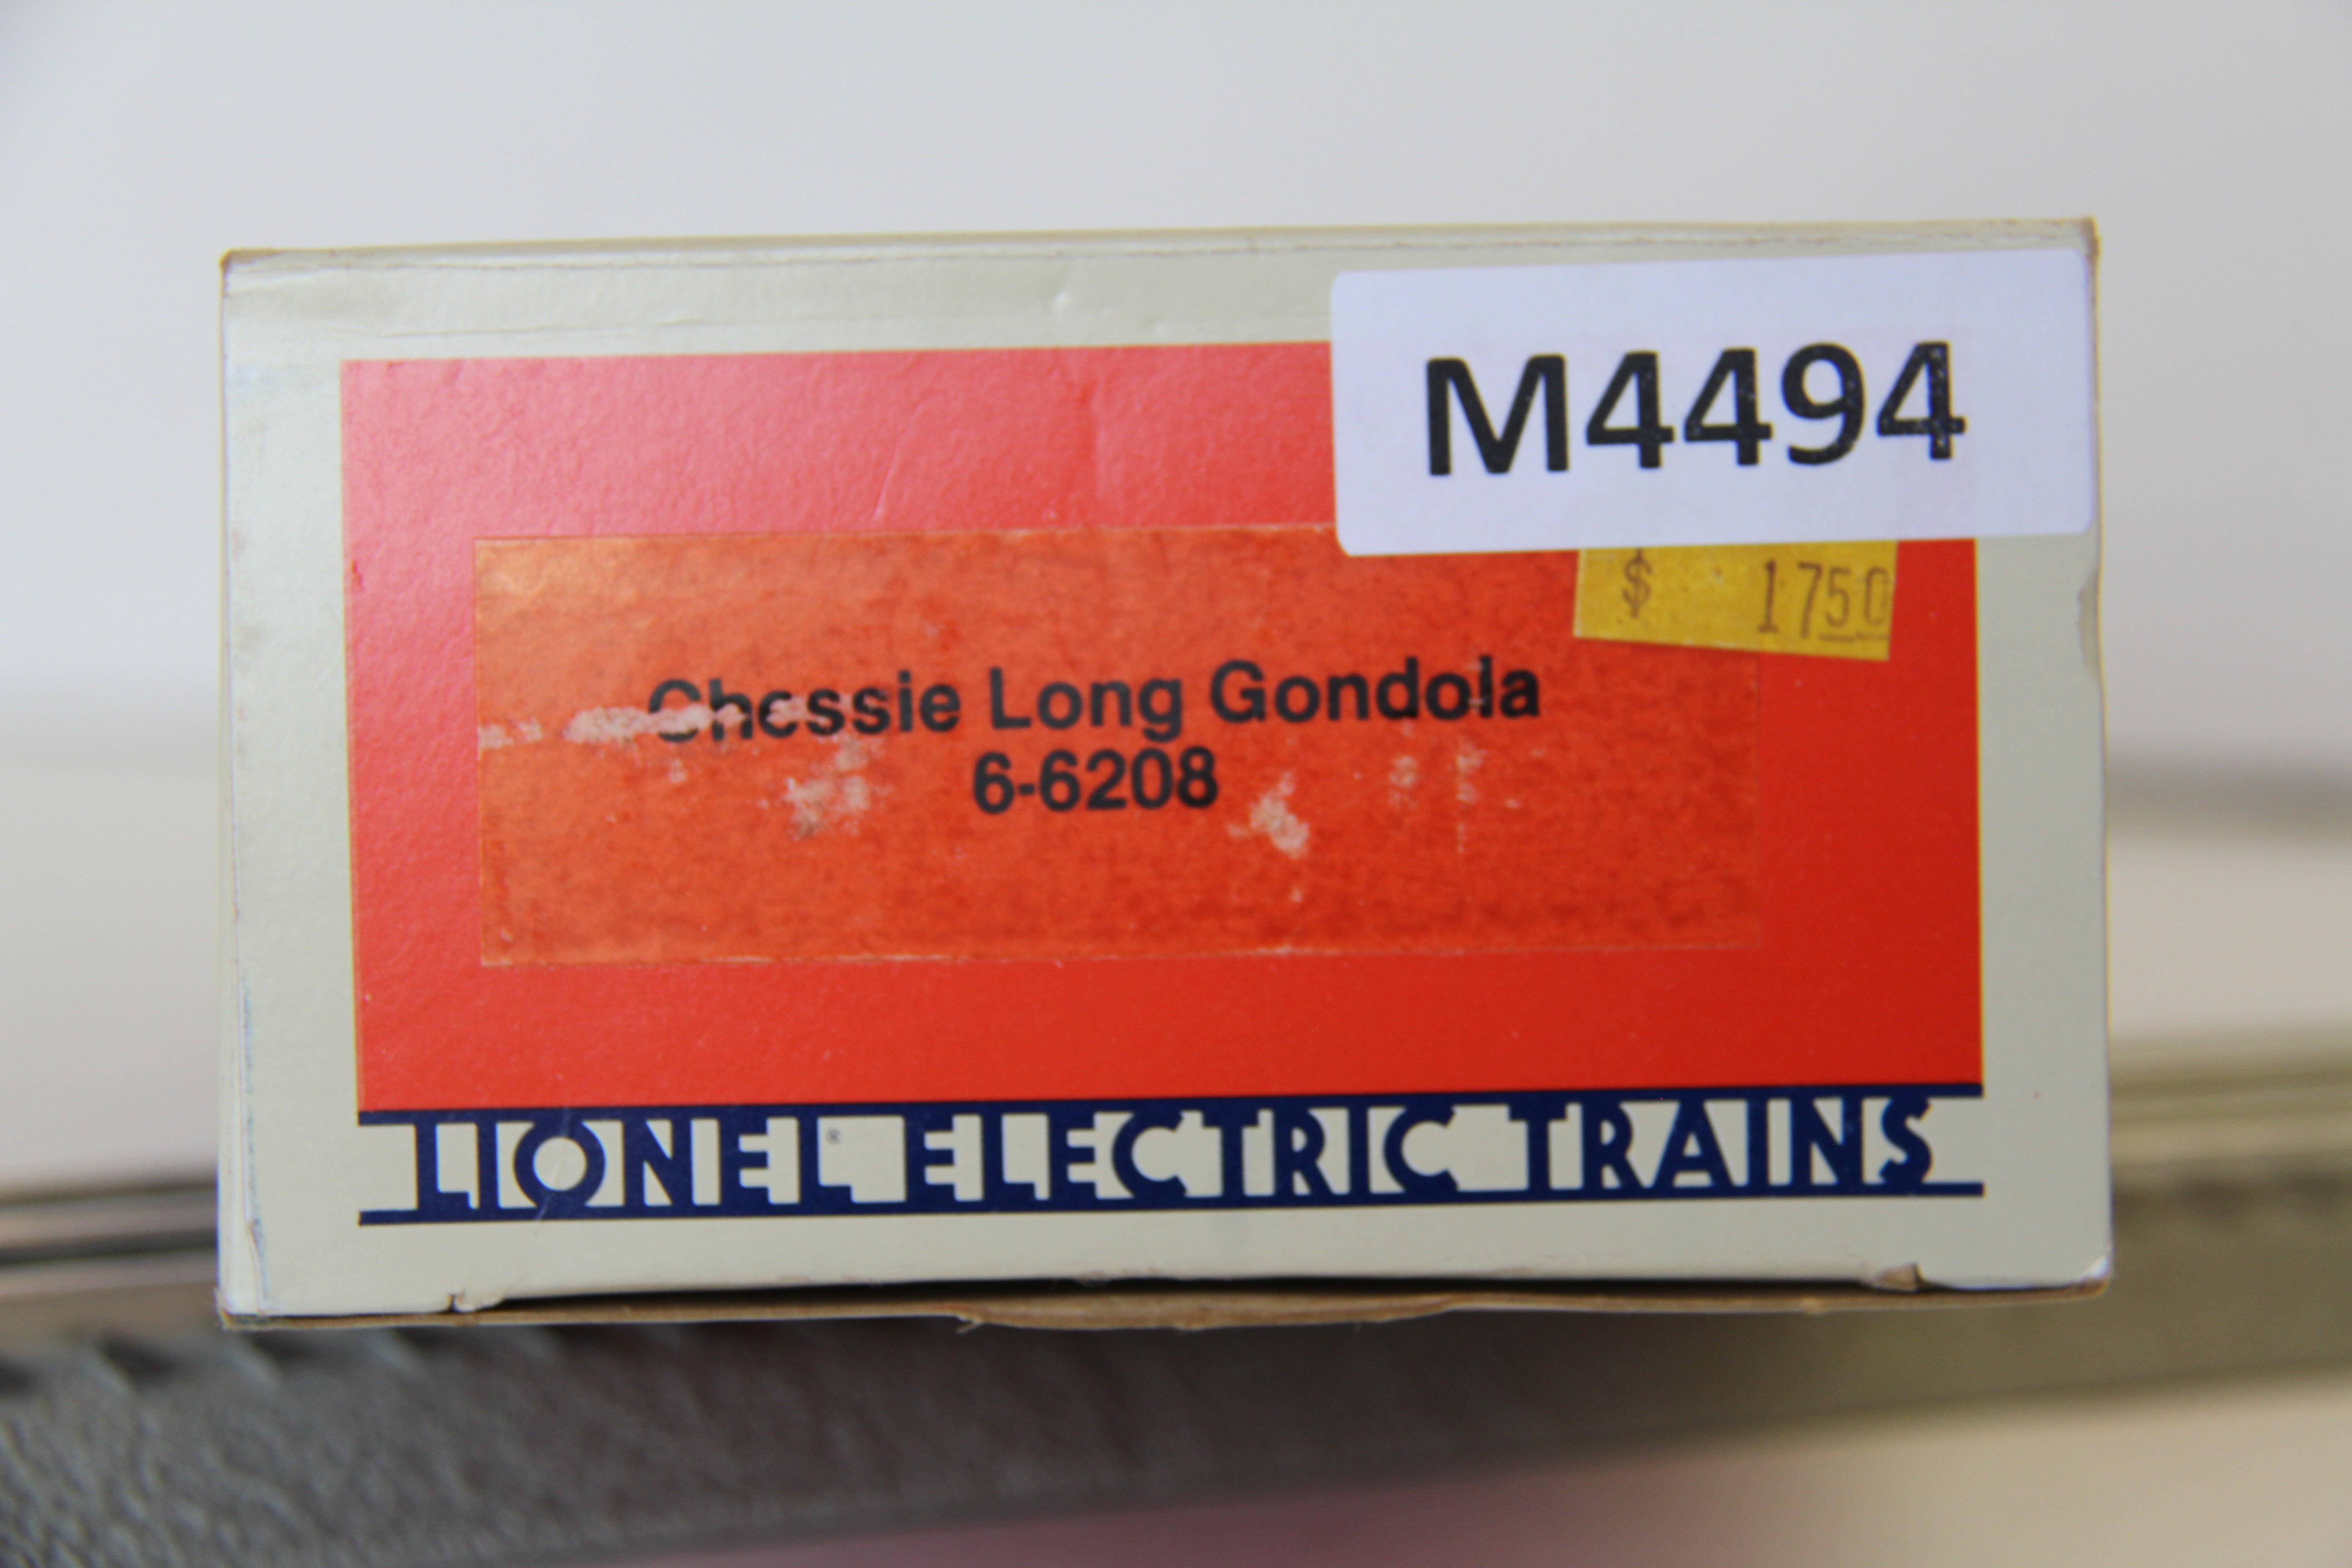 Lionel 6-6208 Chessie Long Gondola-Second hand-M4494